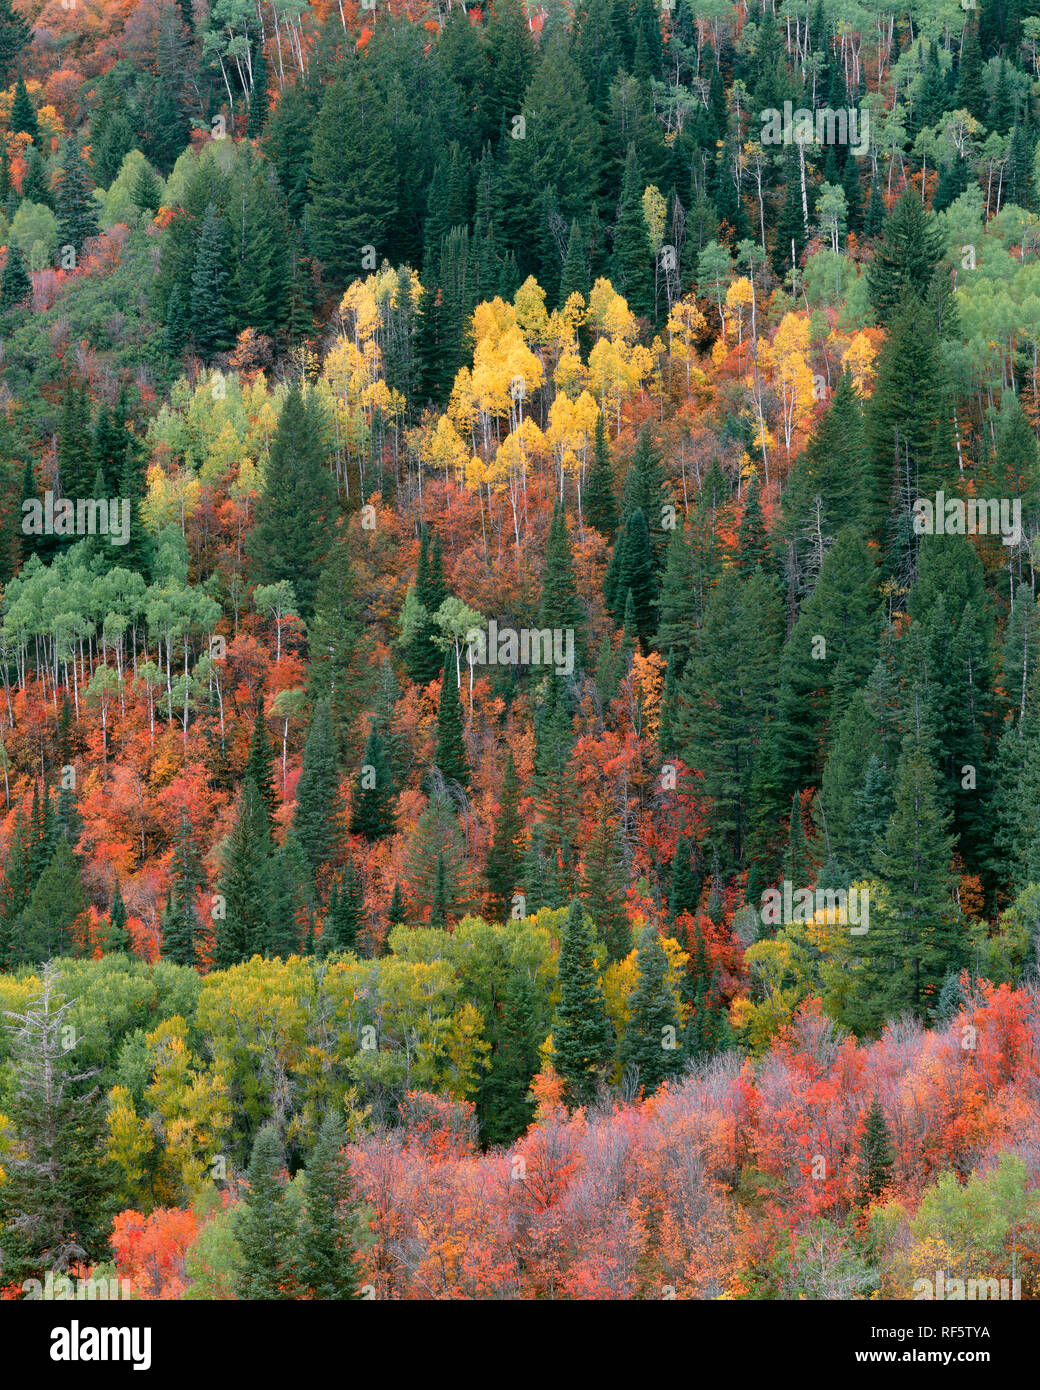 Stati Uniti d'America, Utah, Uinta-Wasatch-Cache National Forest, caduta di acero colorato e aspen mix di conifere in pendenza di Lone Peak Wilderness. Foto Stock